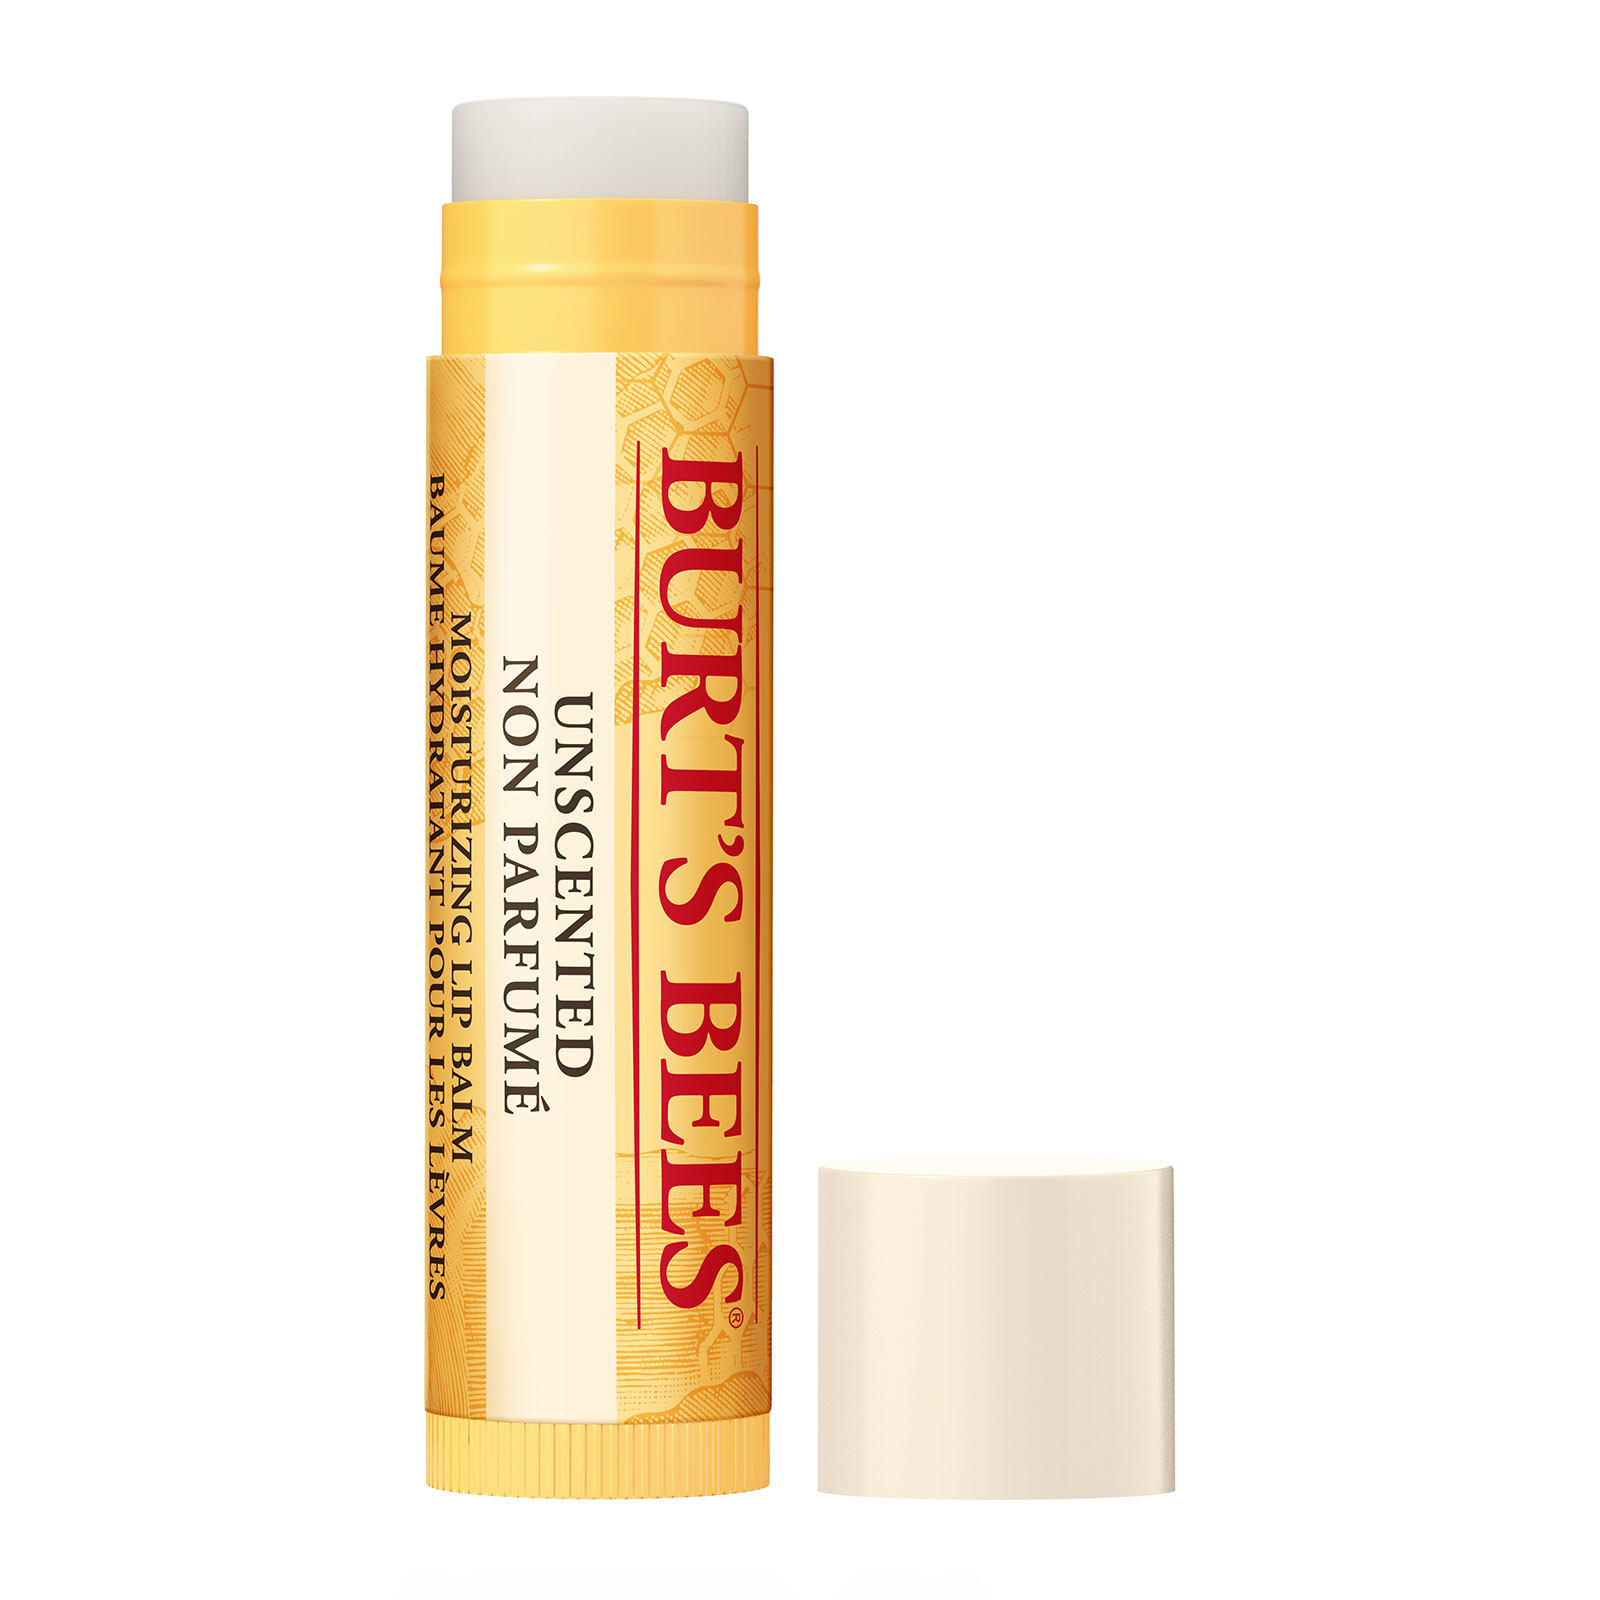 Burt's Bees 100% Natural Origin Unscented Lip Balm 4.25G